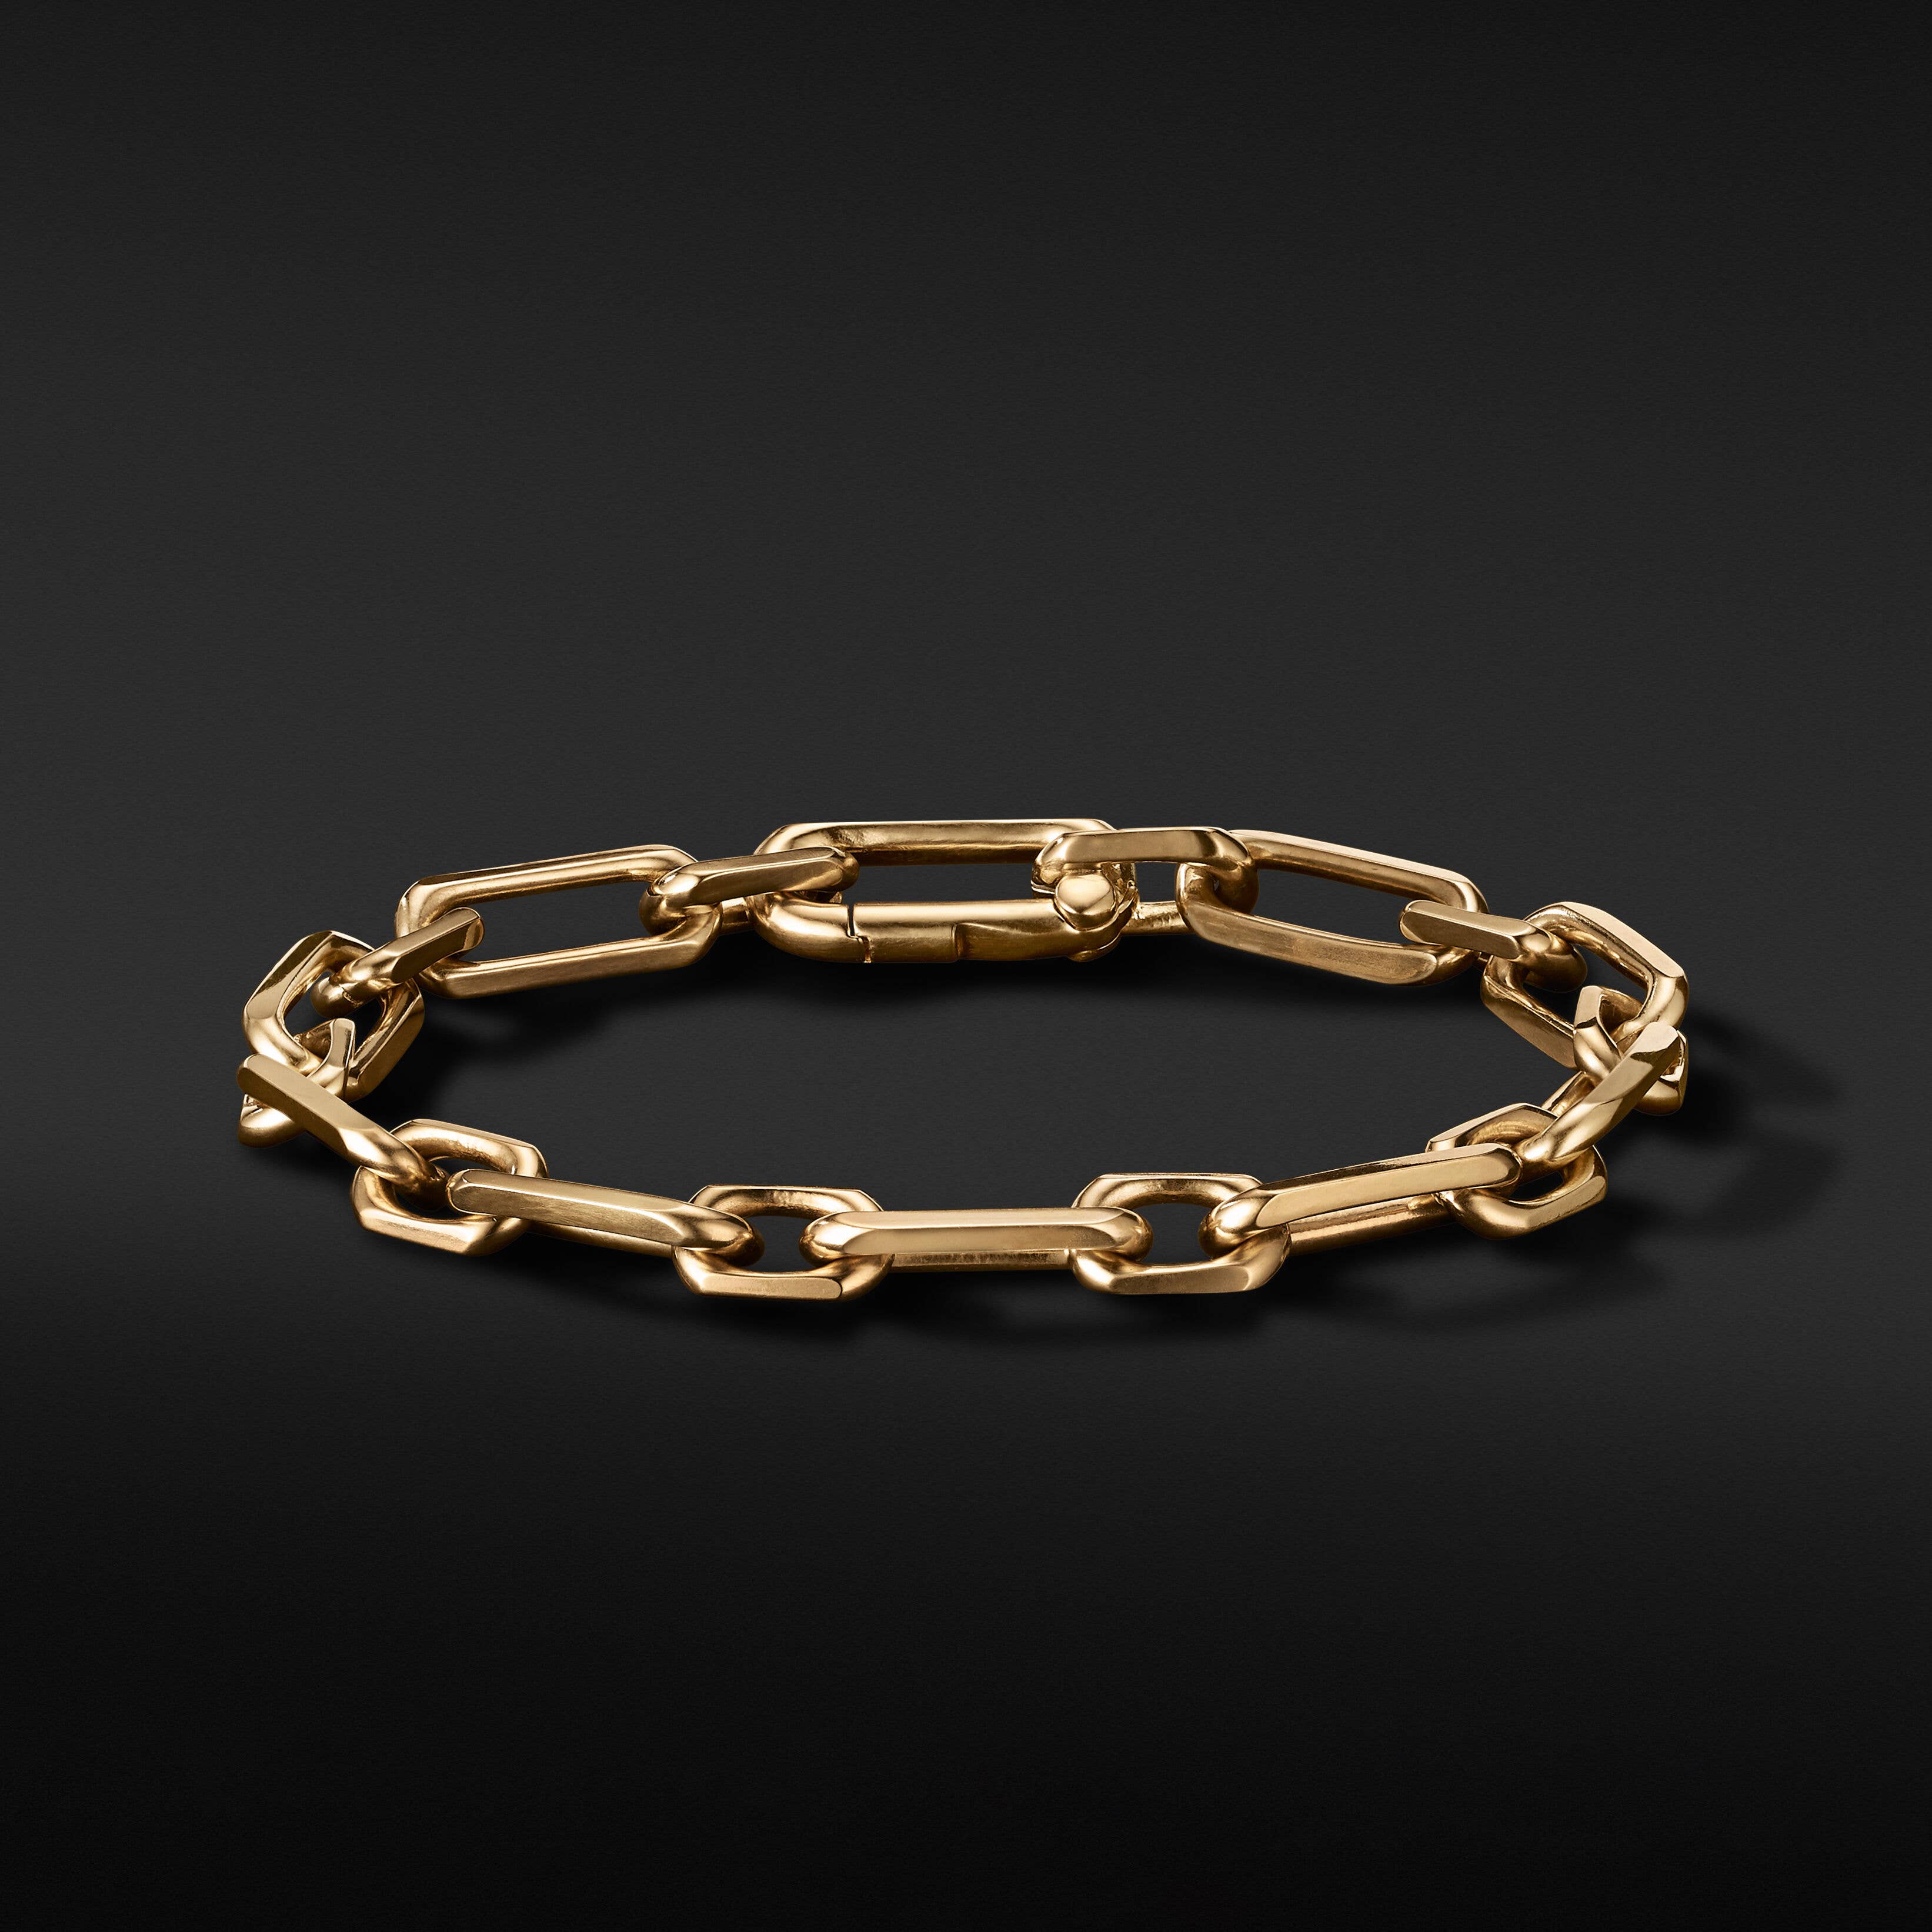 Elongated Open Link Chain Bracelet in 18K Yellow Gold